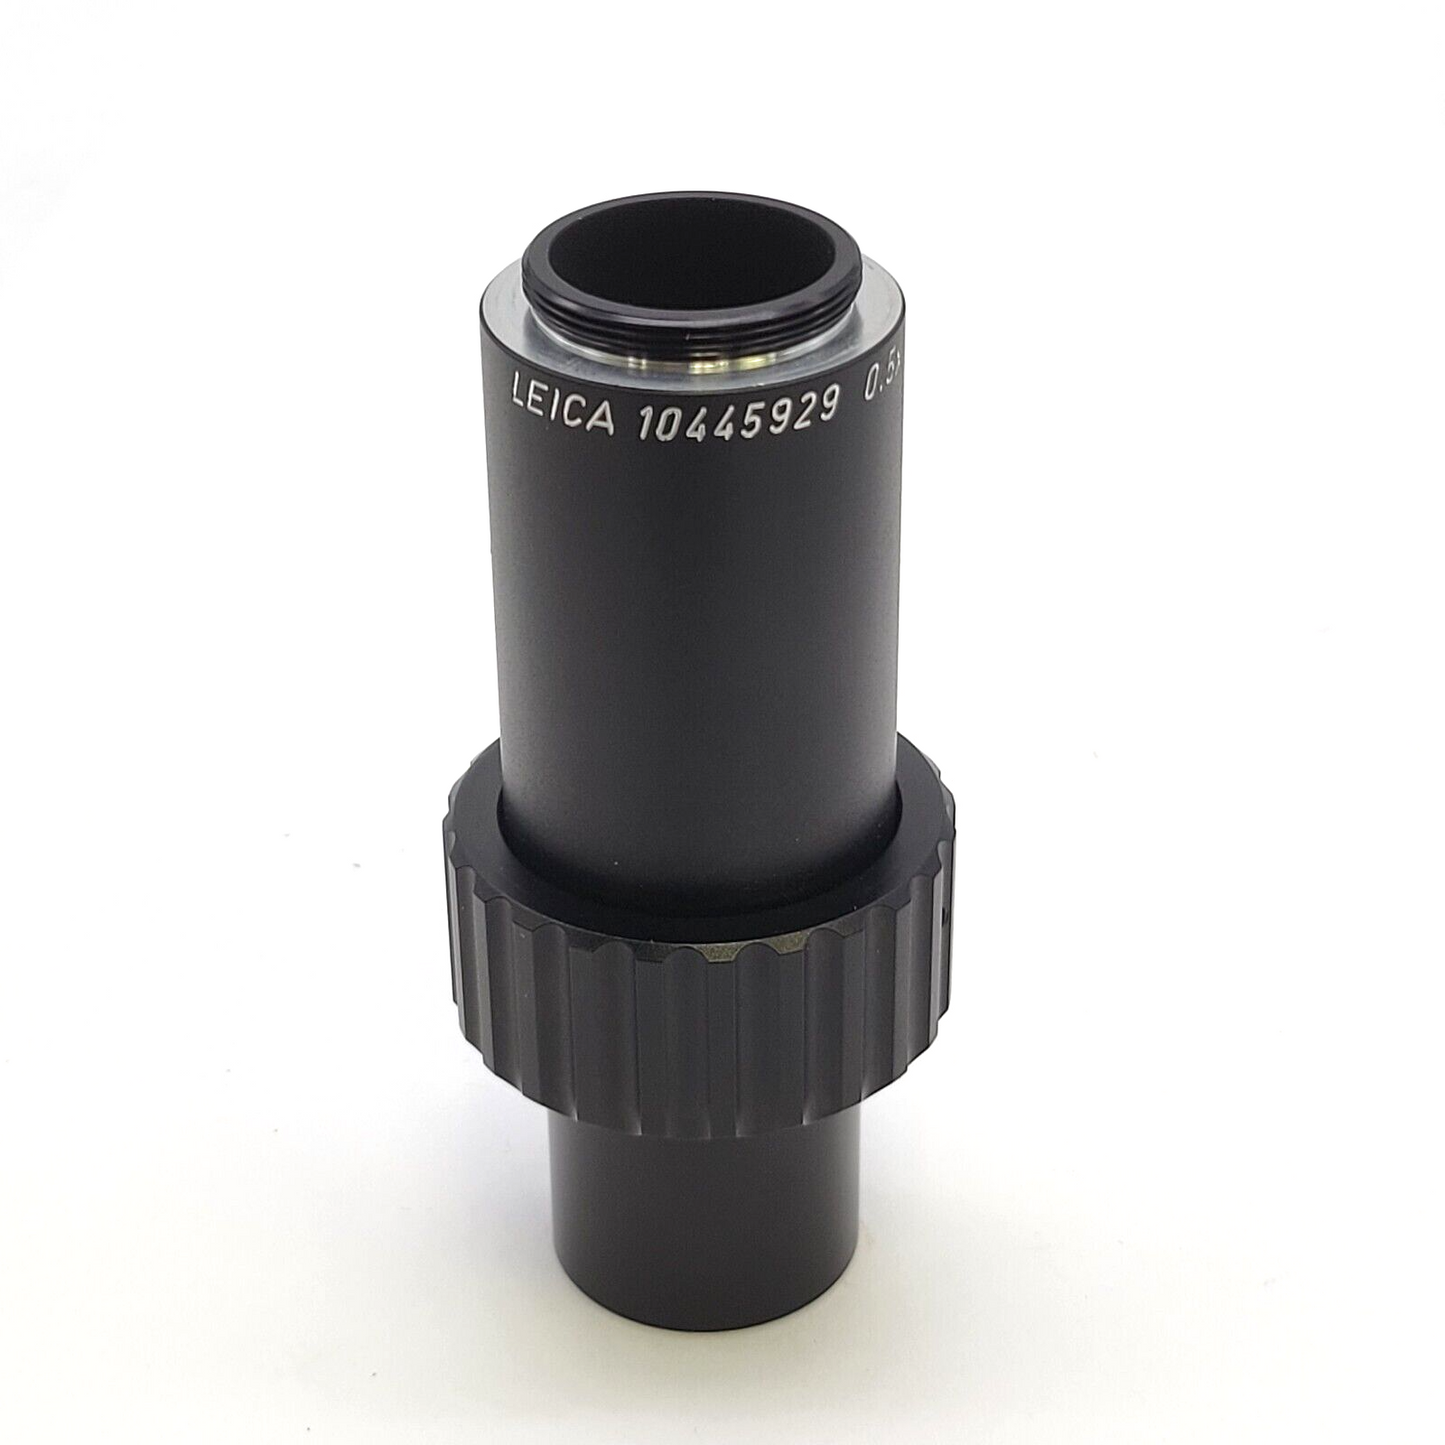 Leica Microscope Camera Adapter 0.5x 10445929 C-Mount - microscopemarketplace